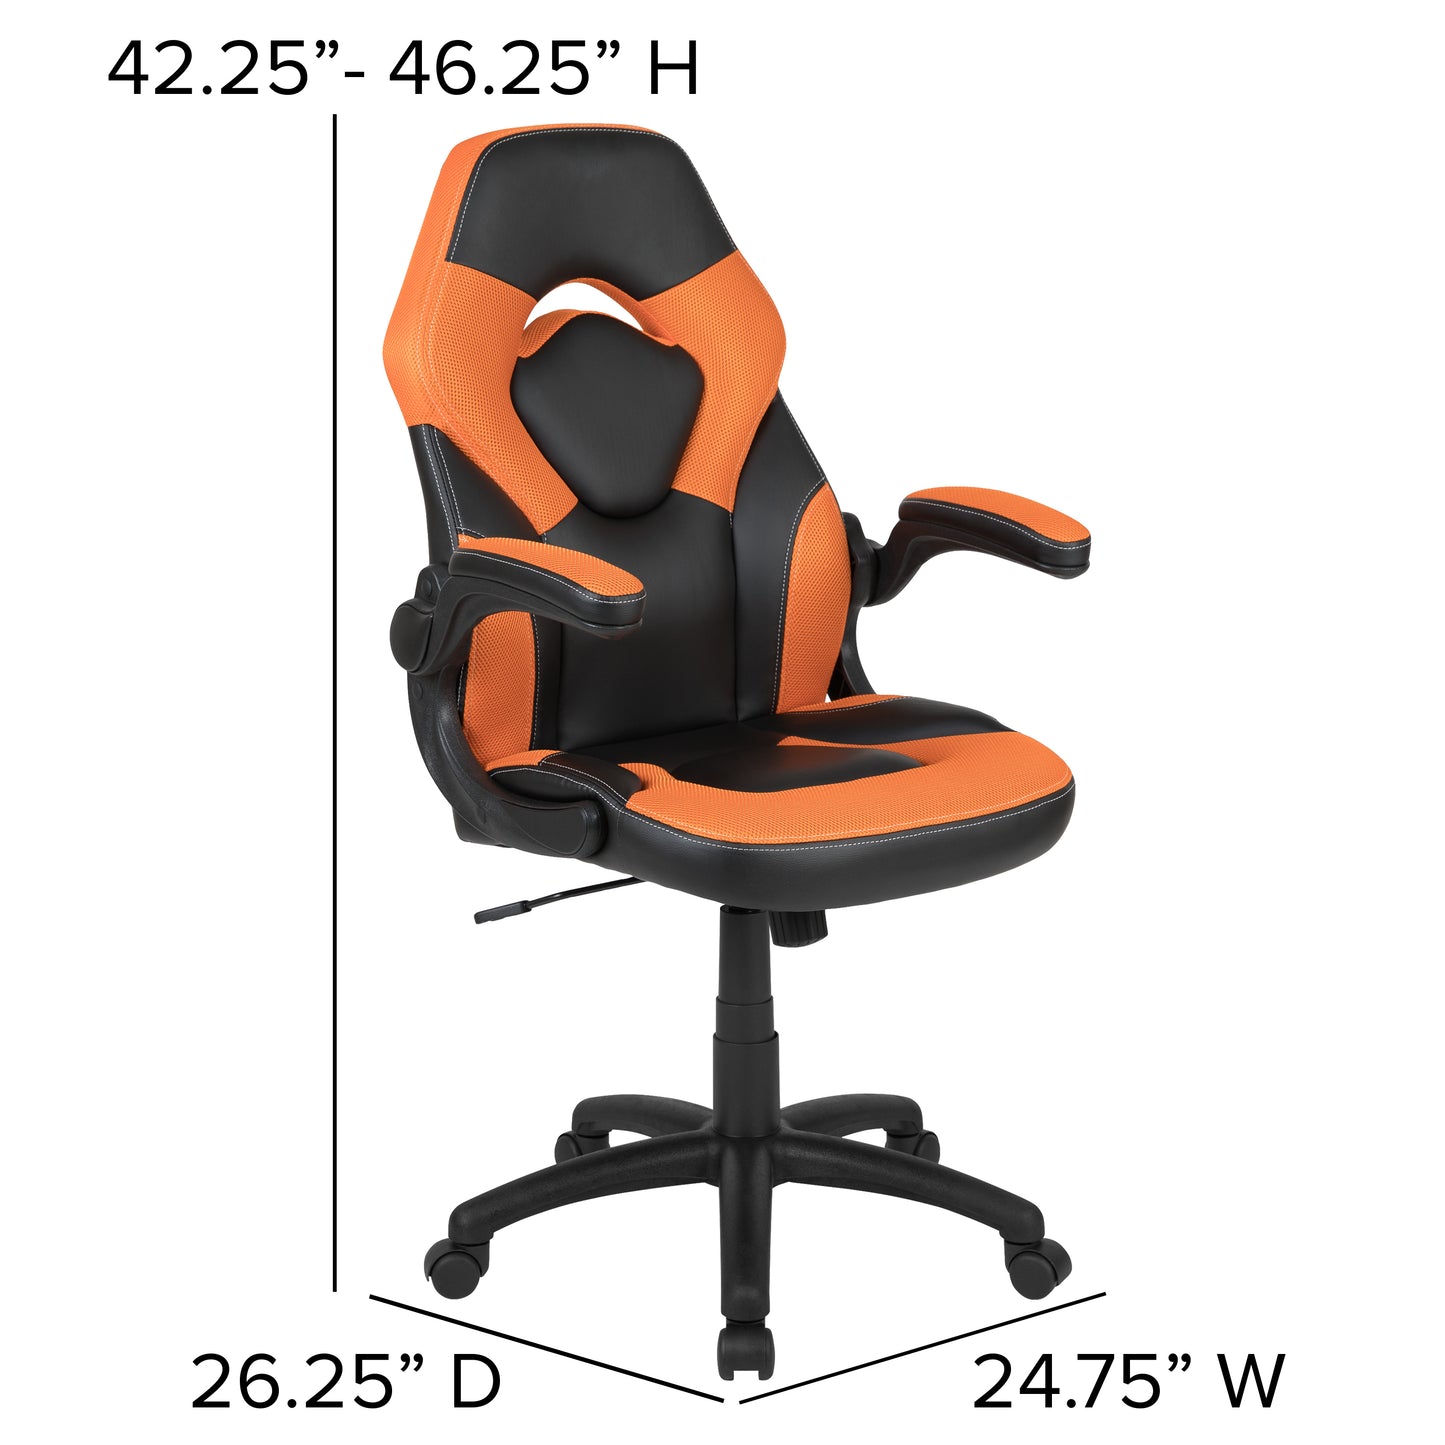 Gaming Desk with Orange Racing Chair Bundle